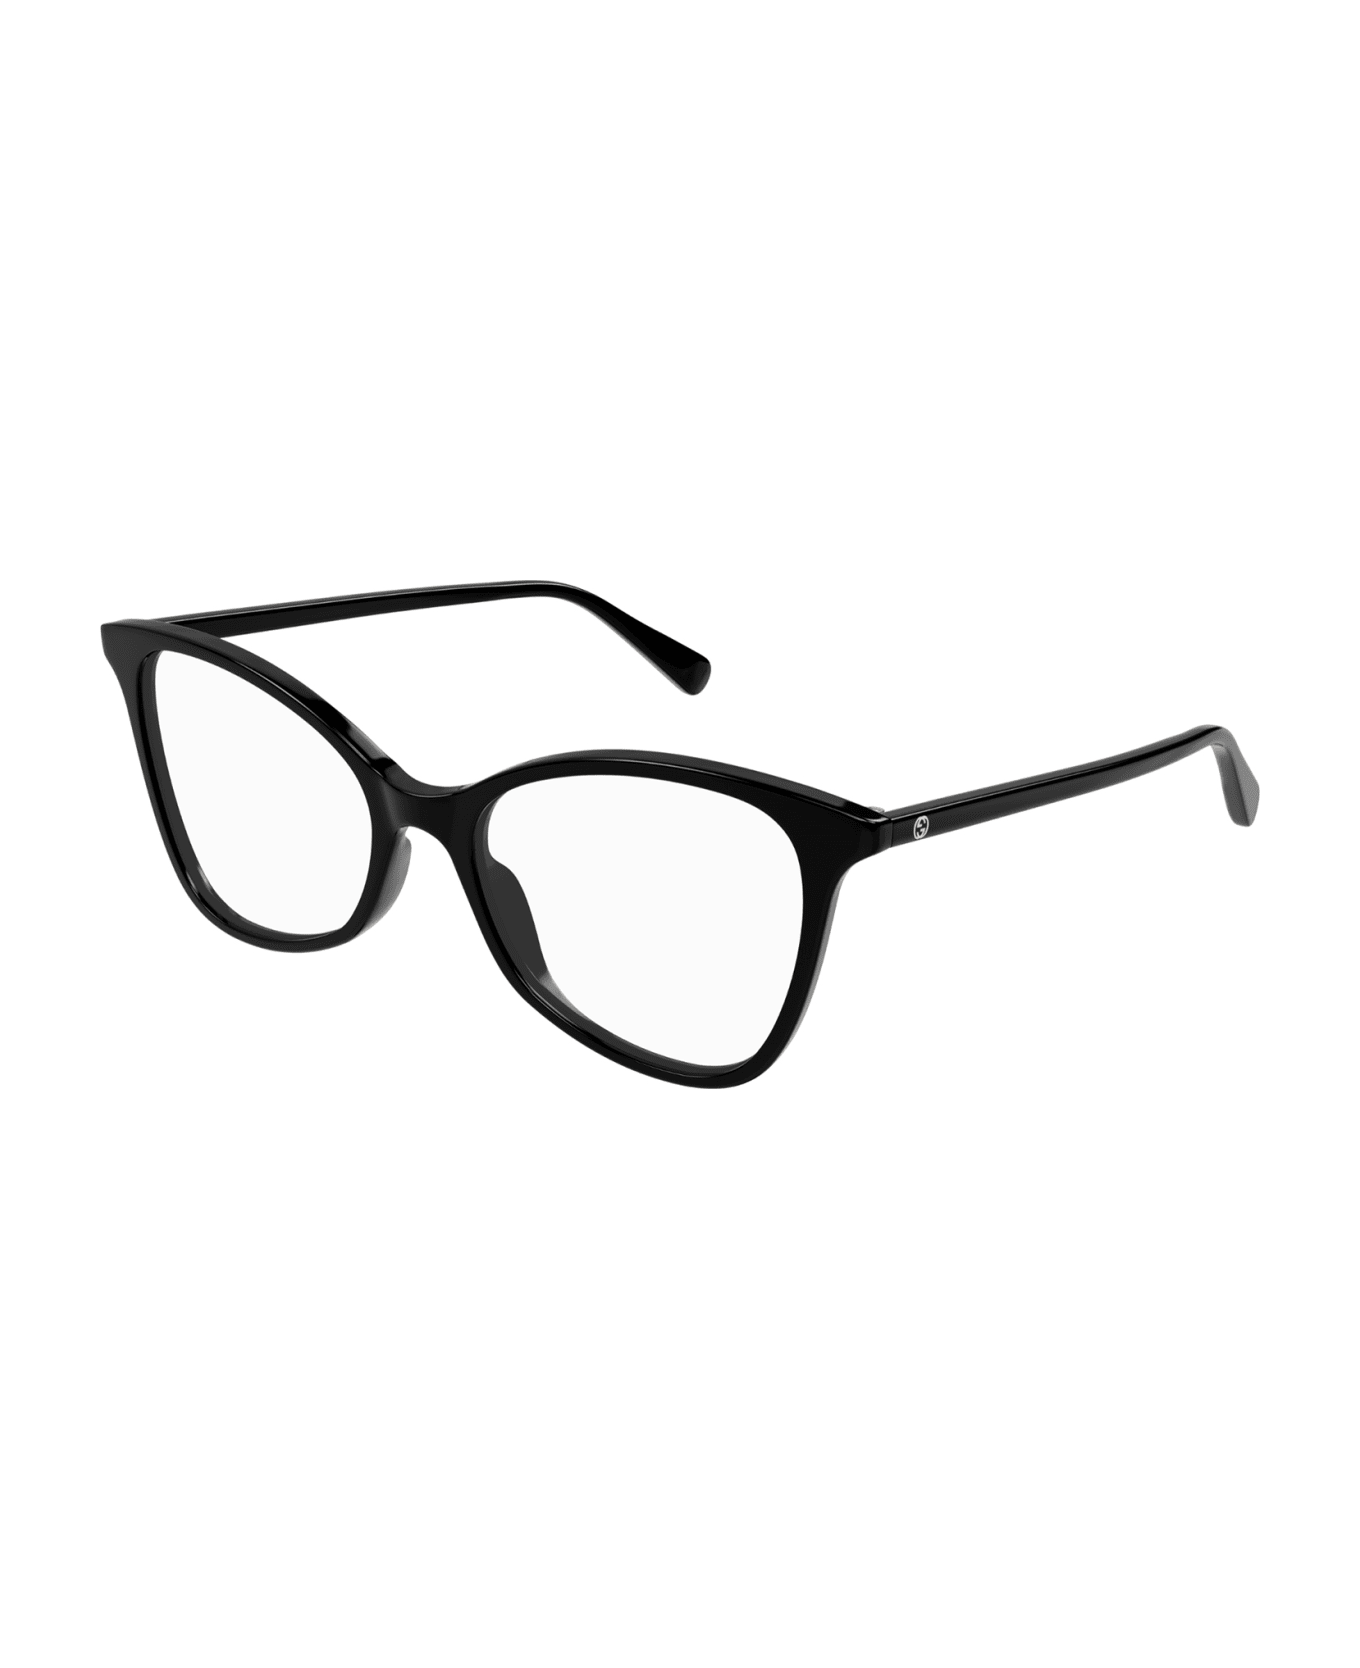 Gucci Eyewear 1fa84li0a Glasses - 001 black black transpare